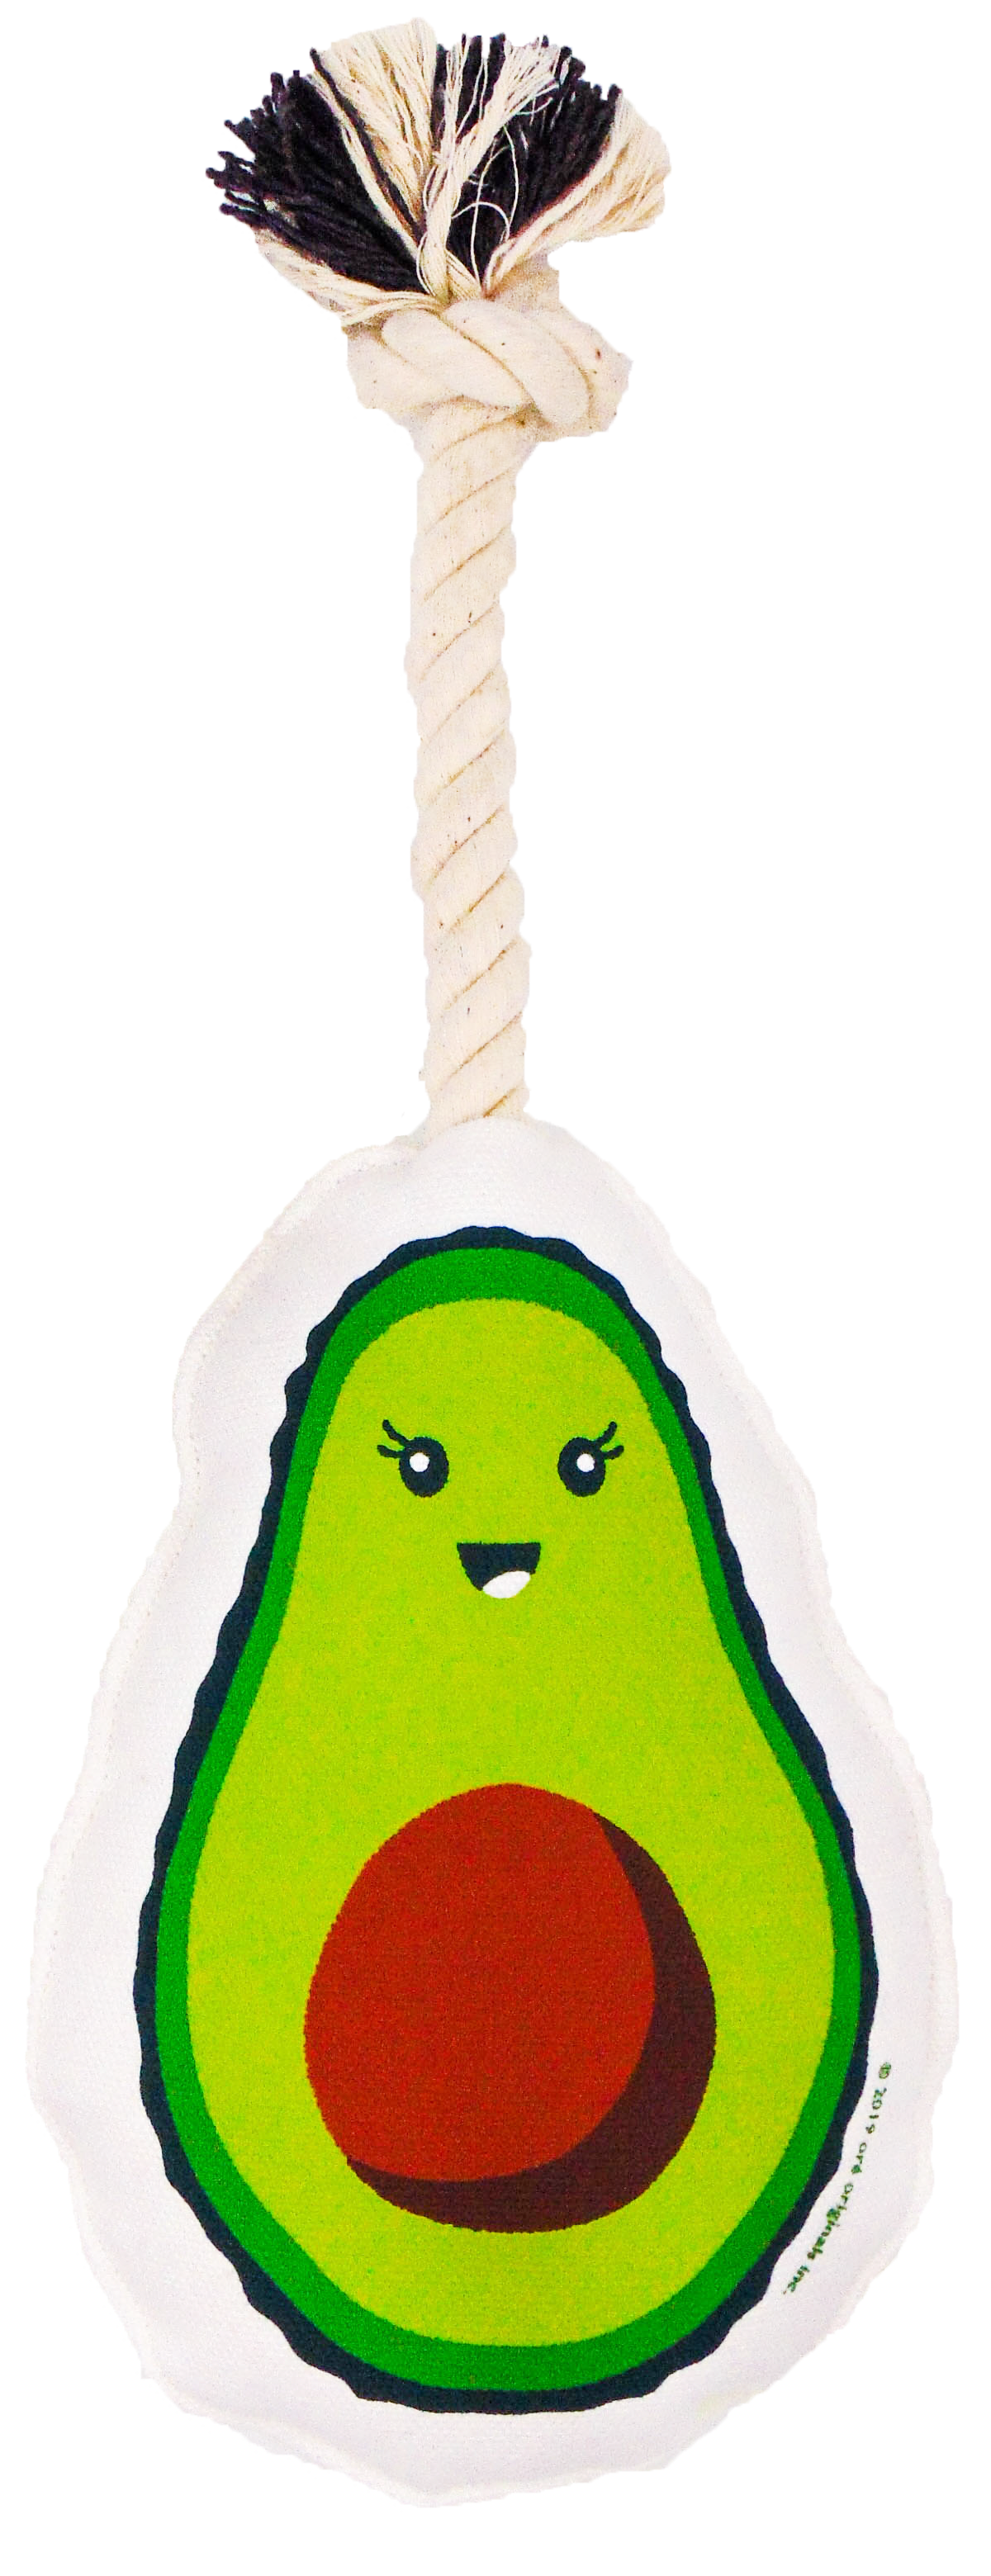 Avocado Rope Toy  Image